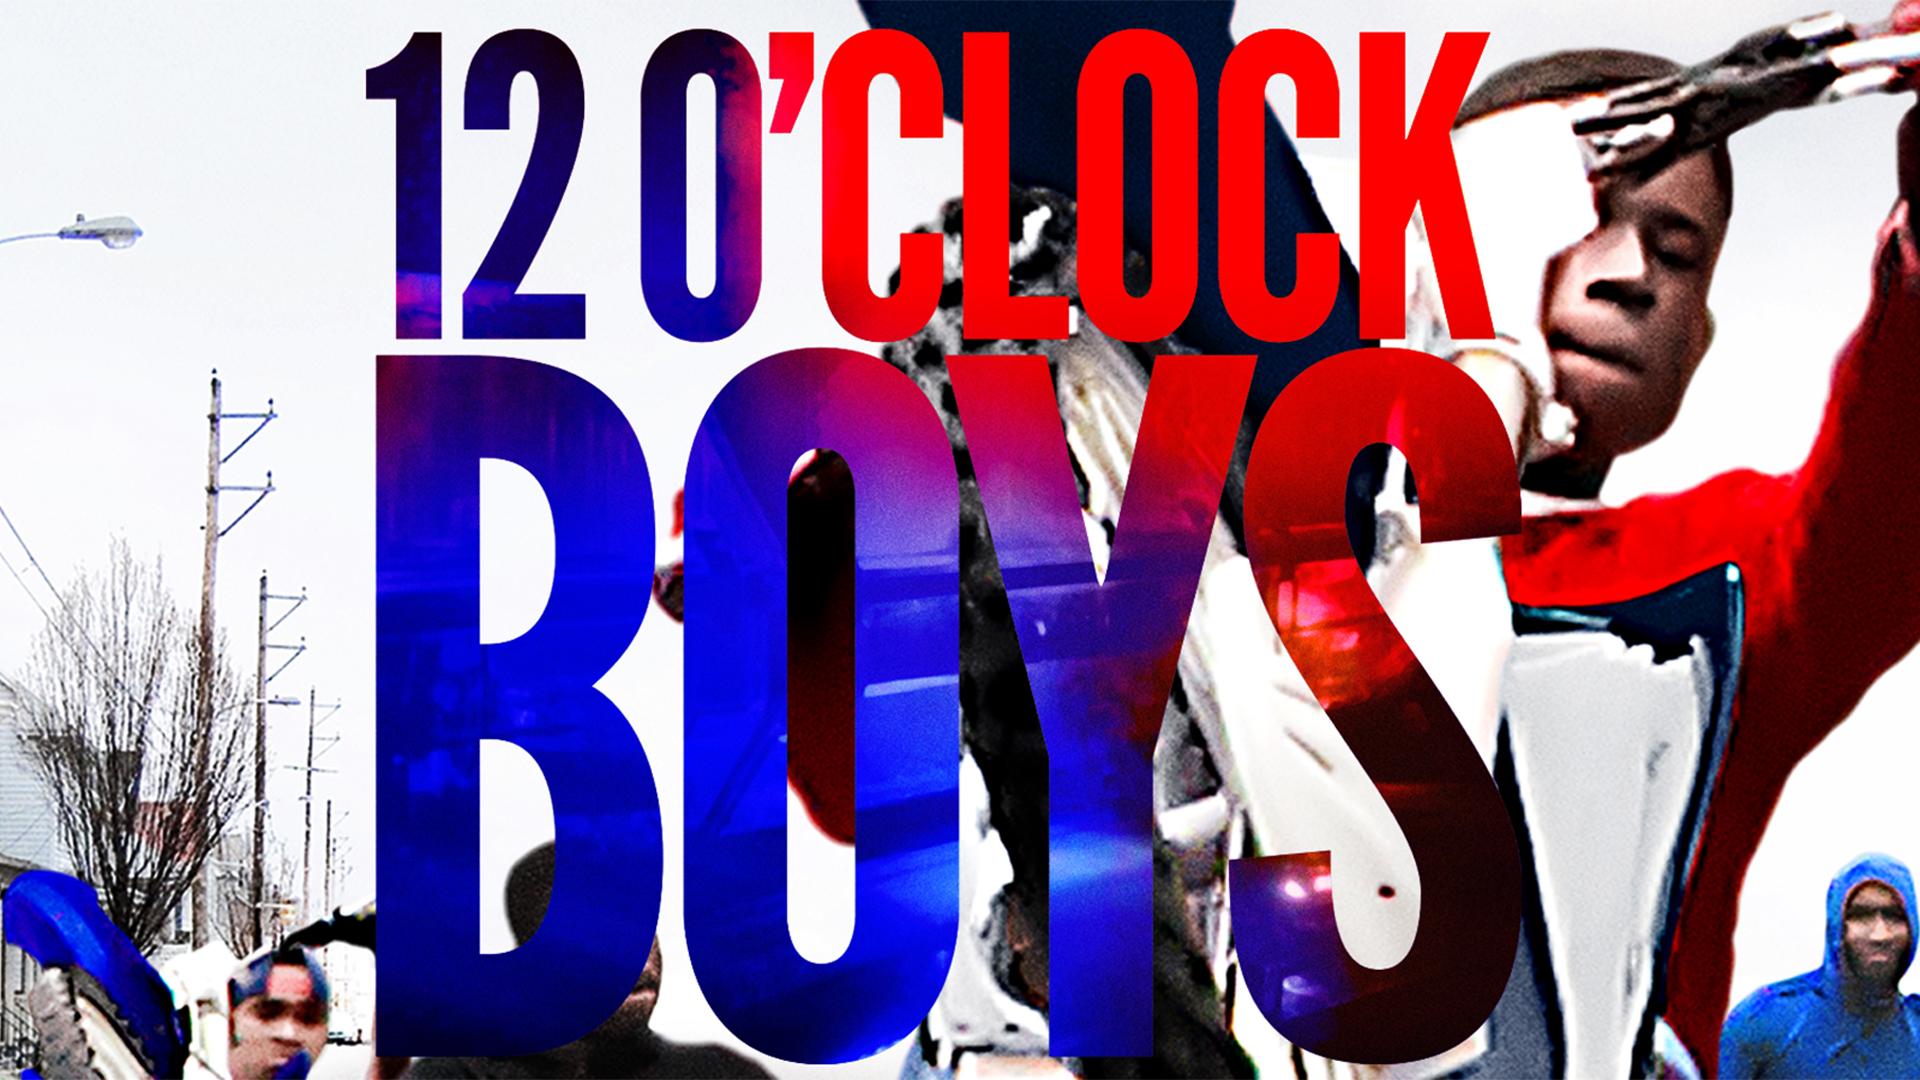 12 O'CLOCK BOYS